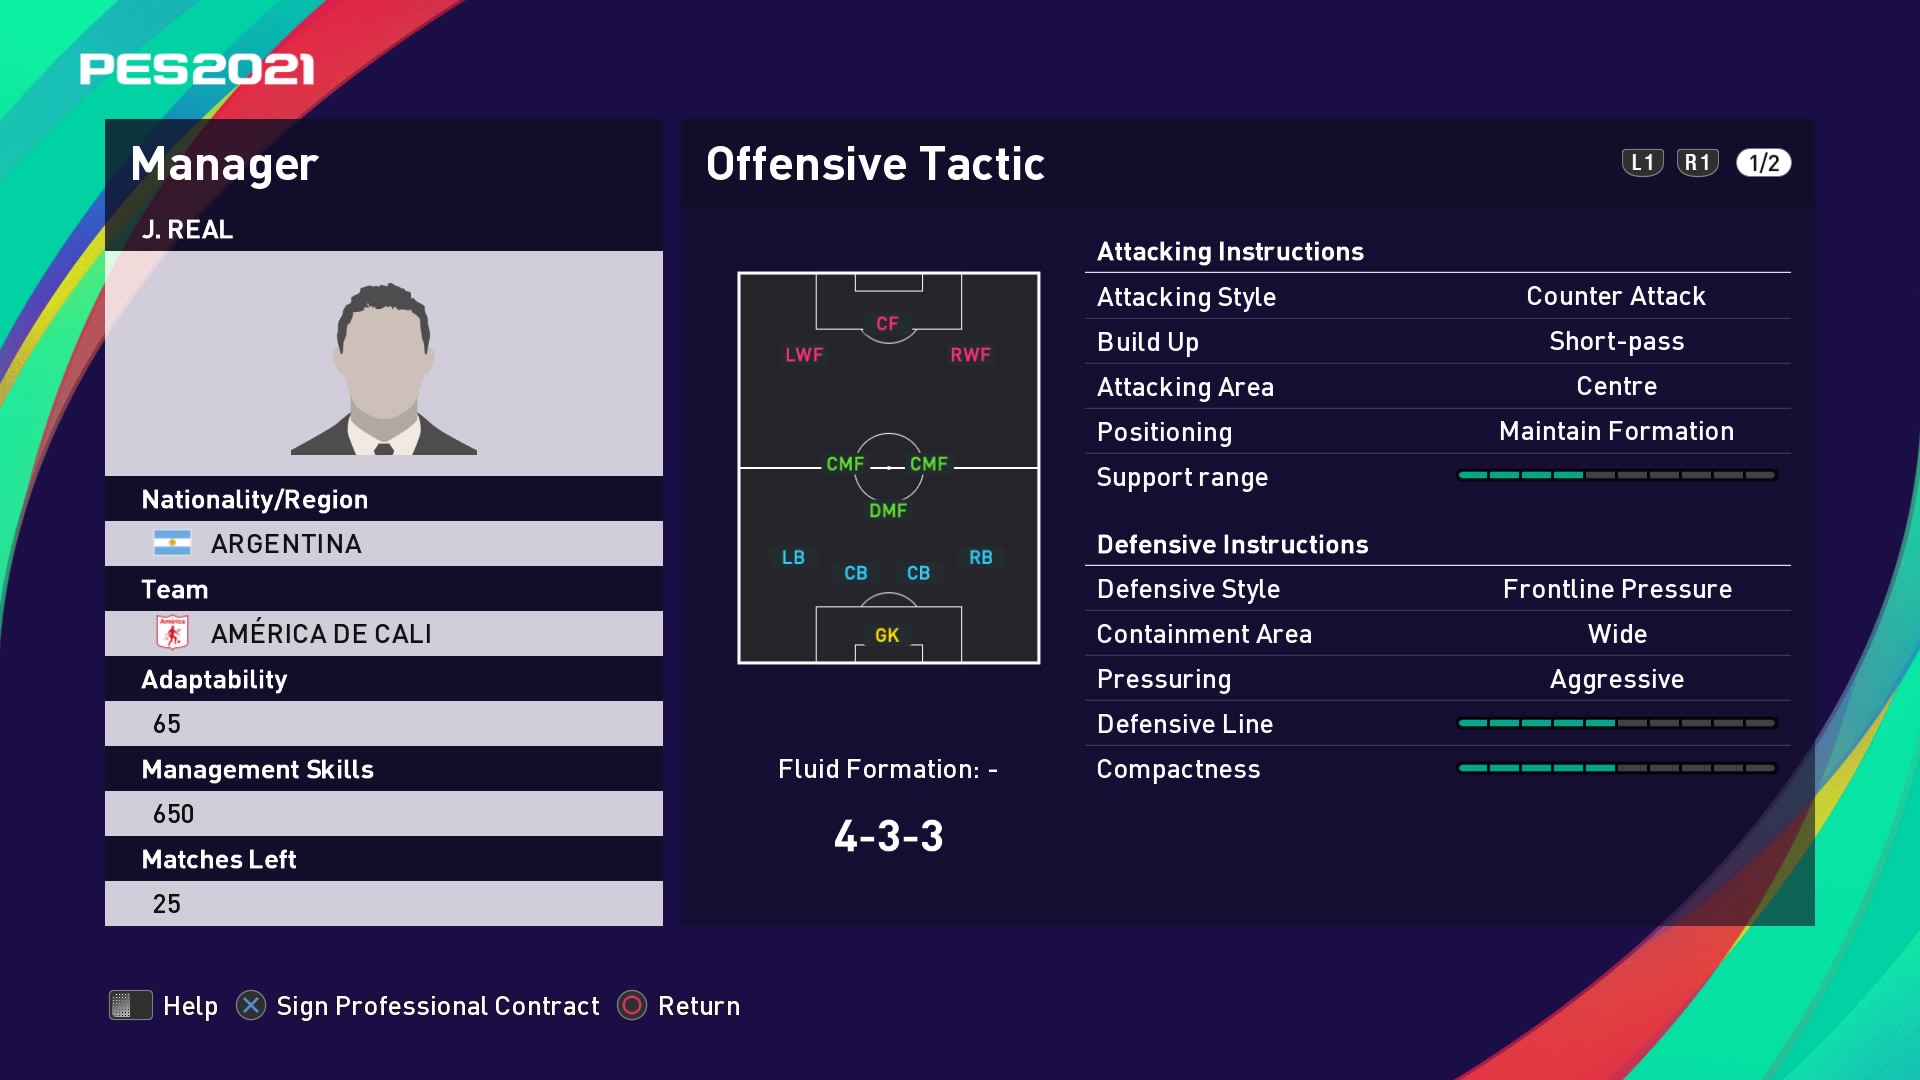 J. Real (Ricardo Gareca) Offensive Tactic in PES 2021 myClub